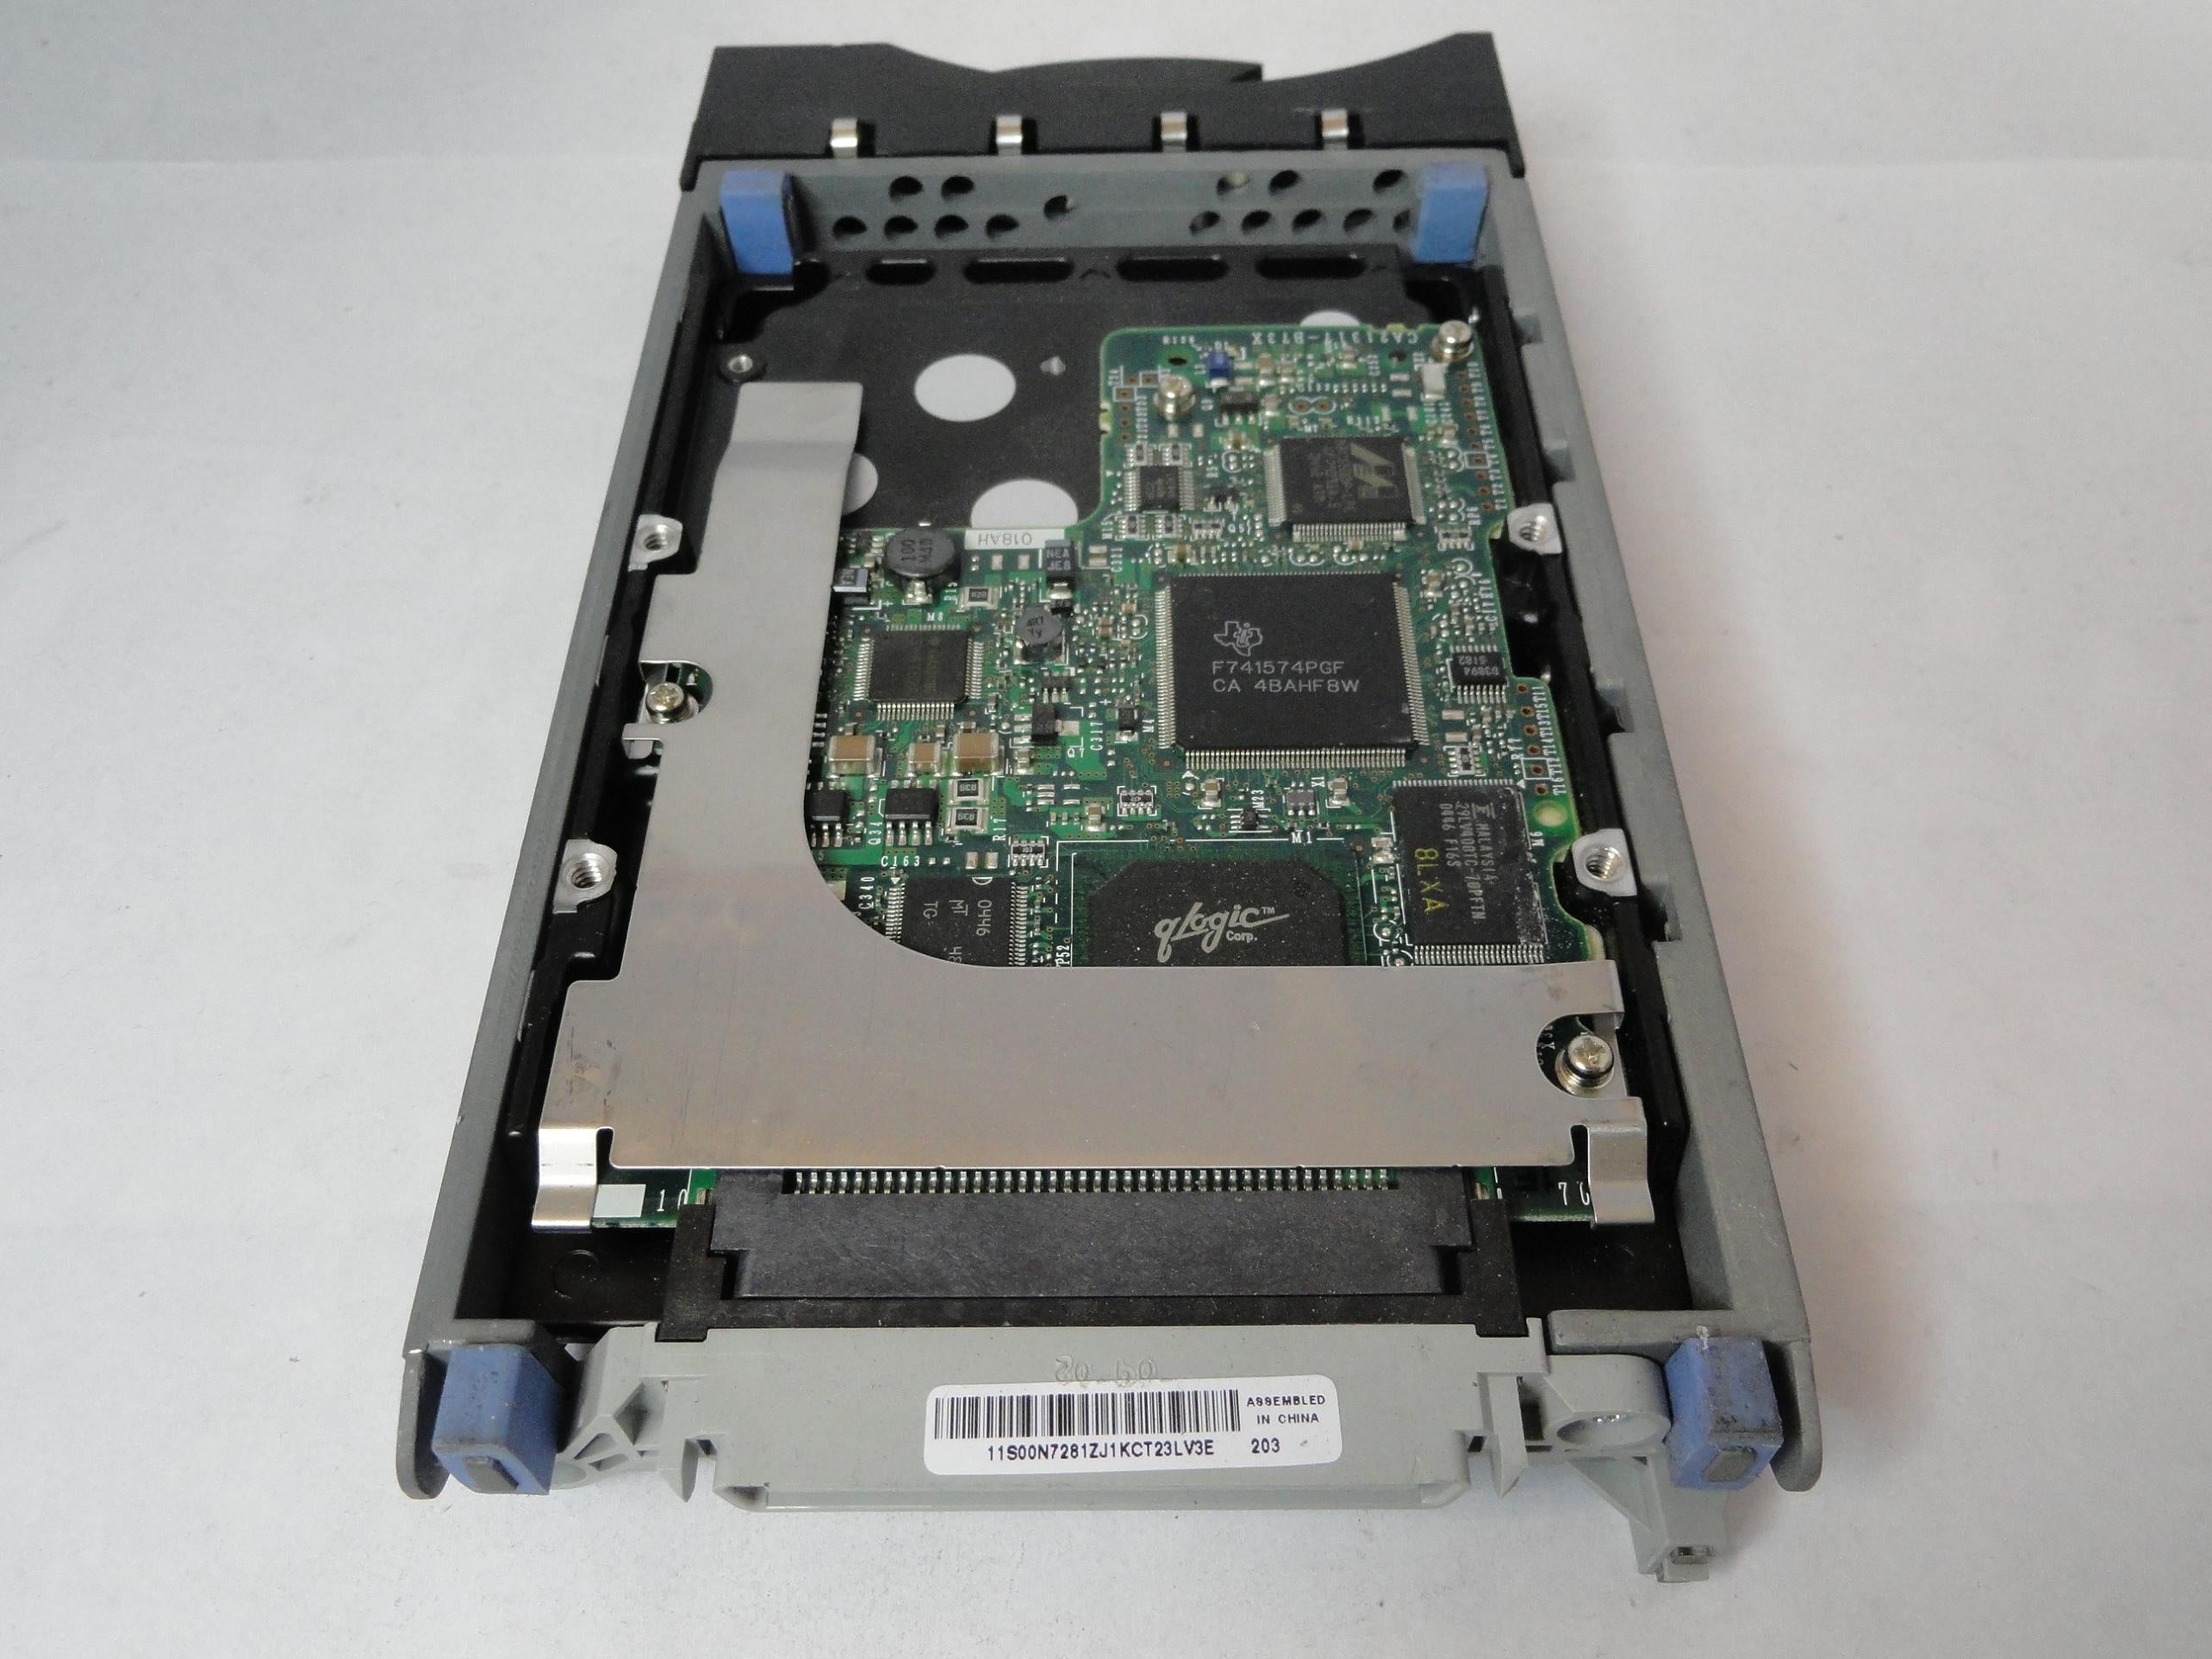 PR22787_CA06227-B45900BA_Fujitsu IBM 73.4Gb SCSI 80 Pin 15Krpm 3.5in HDD - Image2